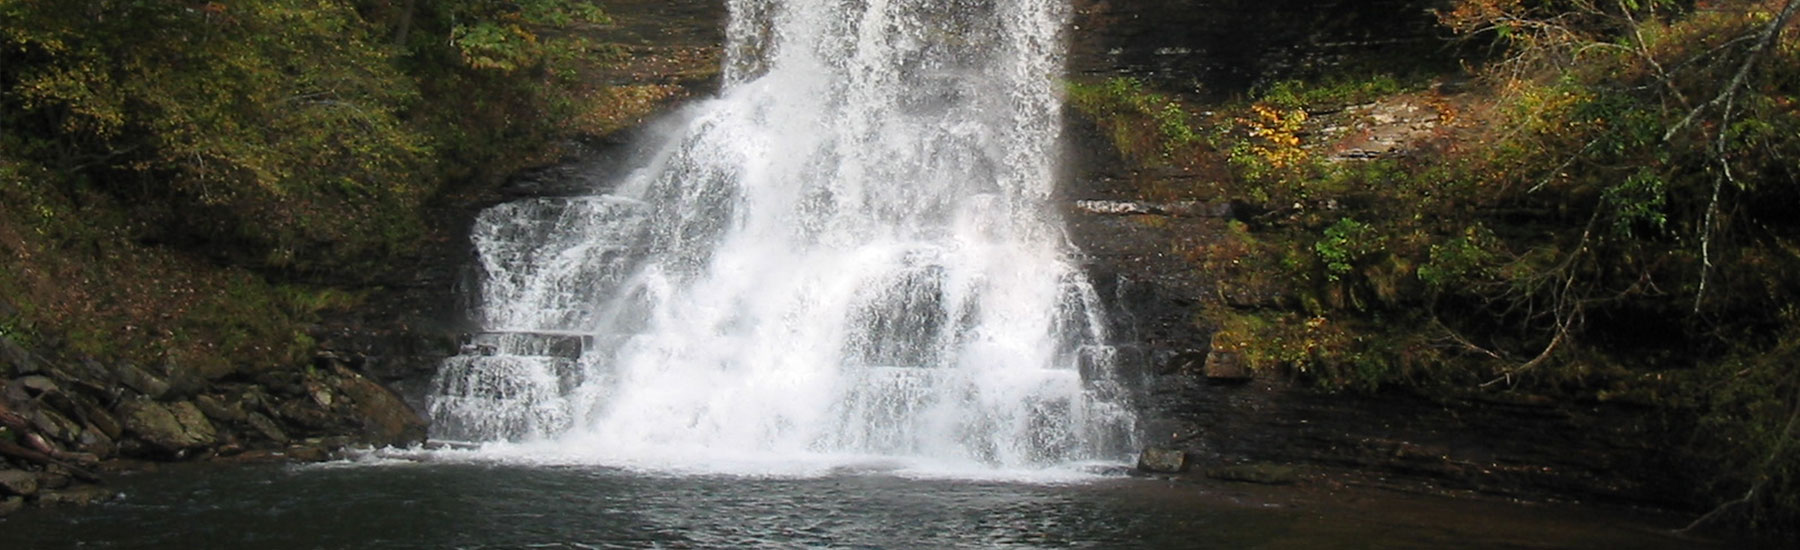 view of cascade waterfall